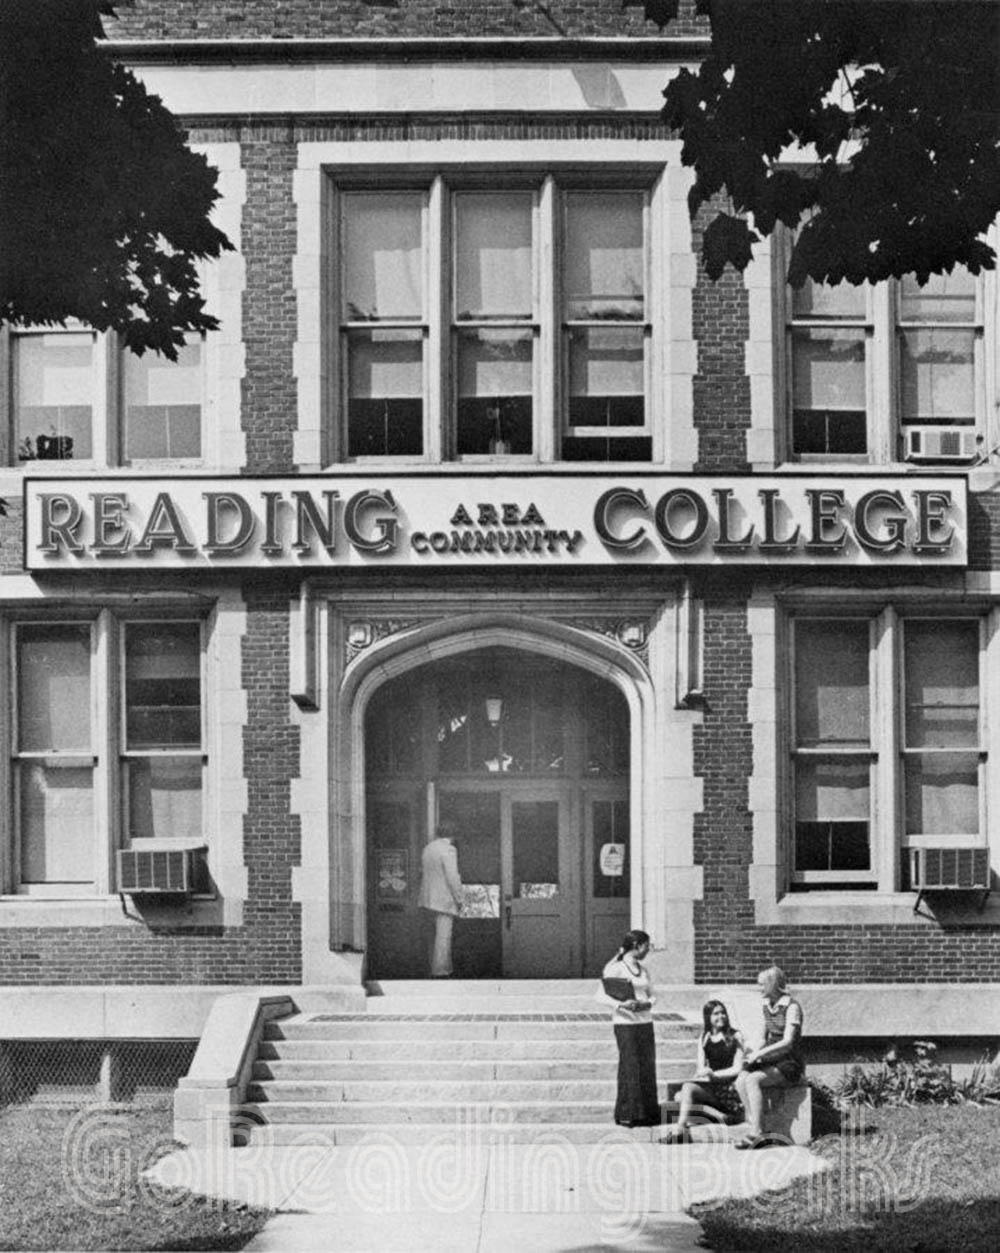 Reading Area Community College, Northmont